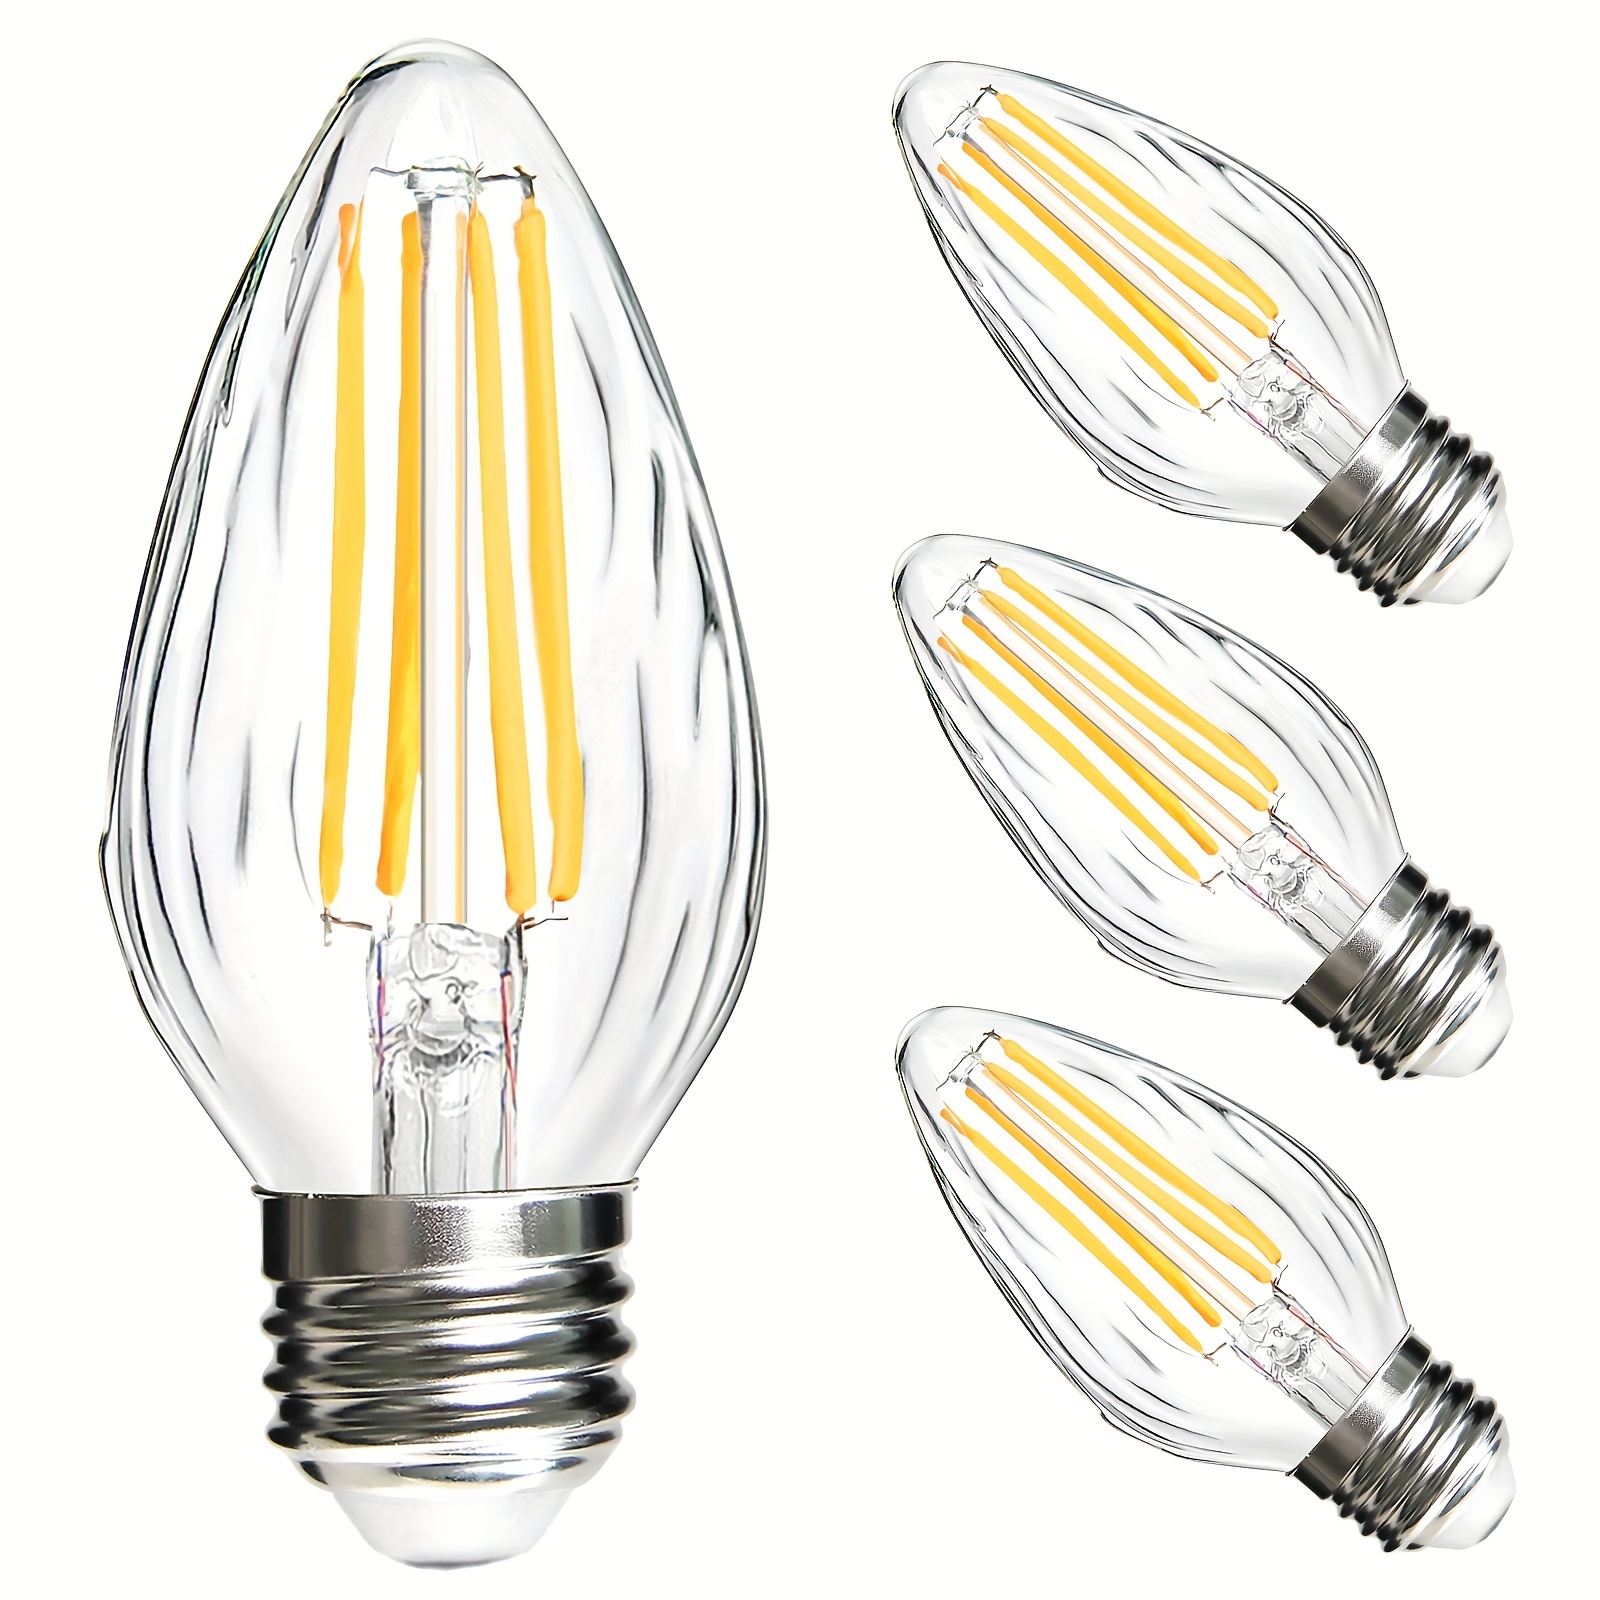 E14 LED Filament Bulb Retro Edison Glass Bulb for Home Ceilling Decoration  C35/C35L/G45 